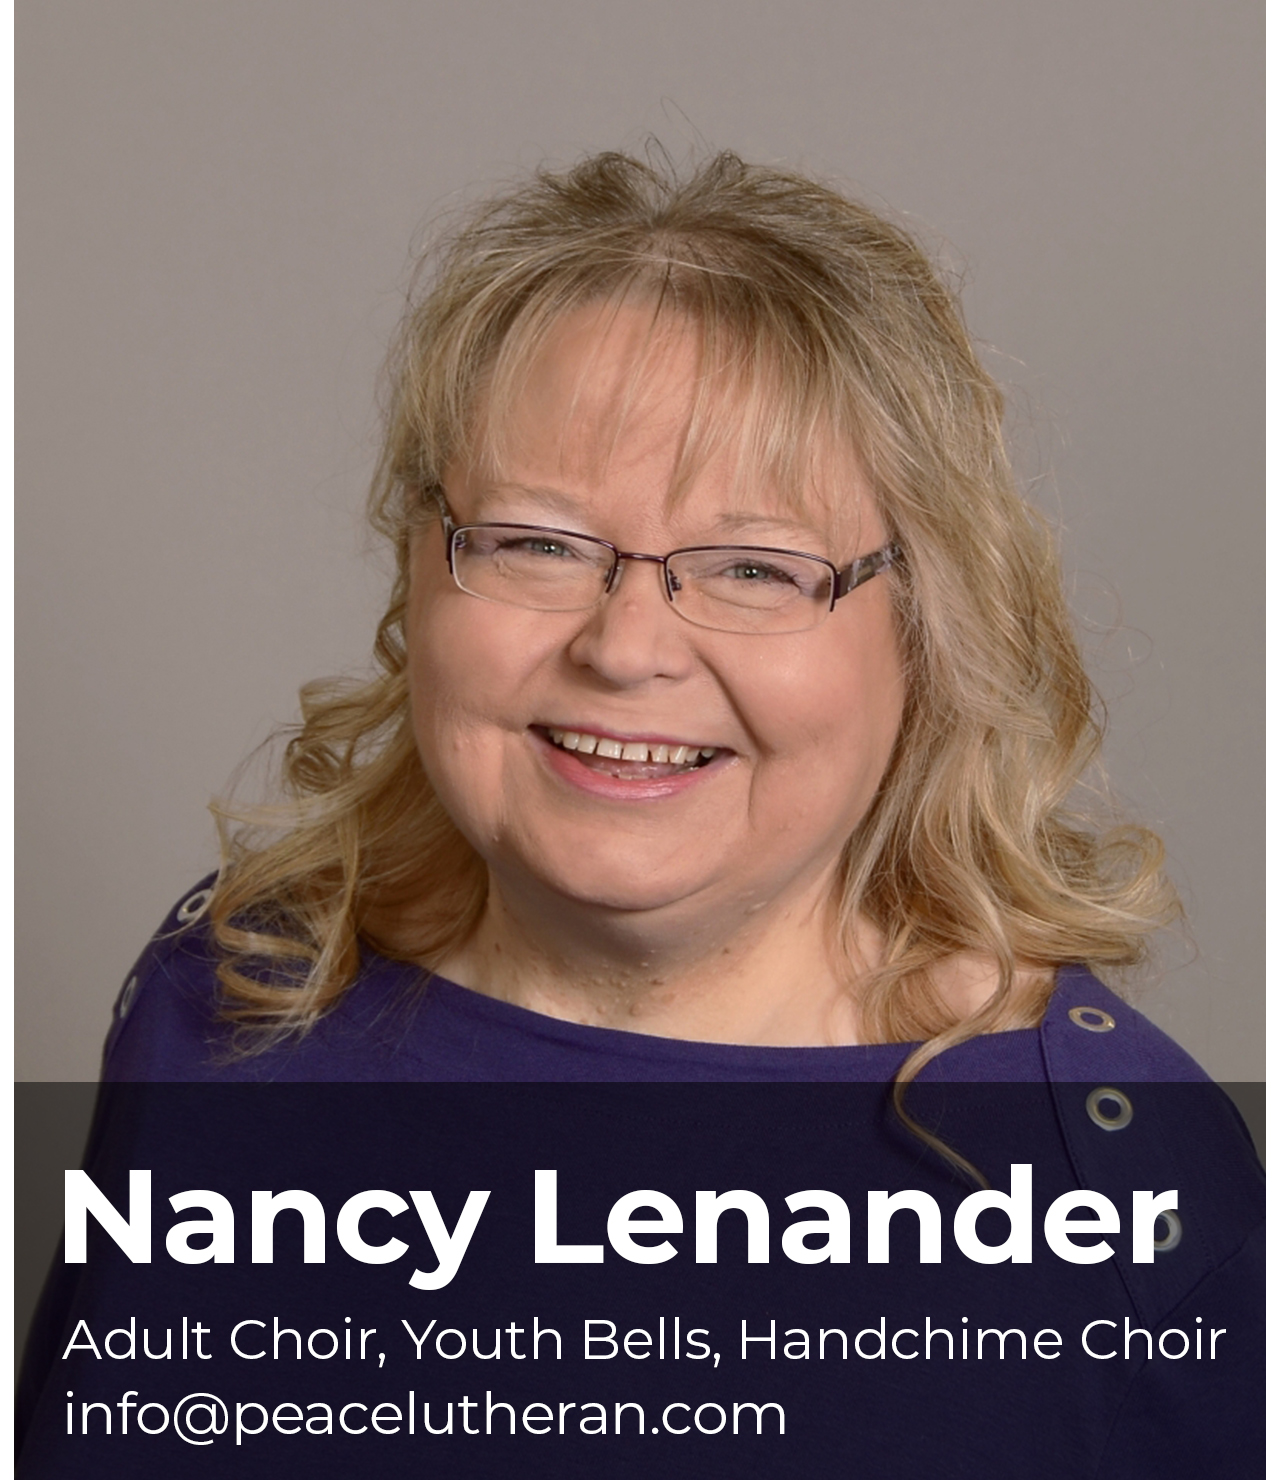 Nancy Lendander